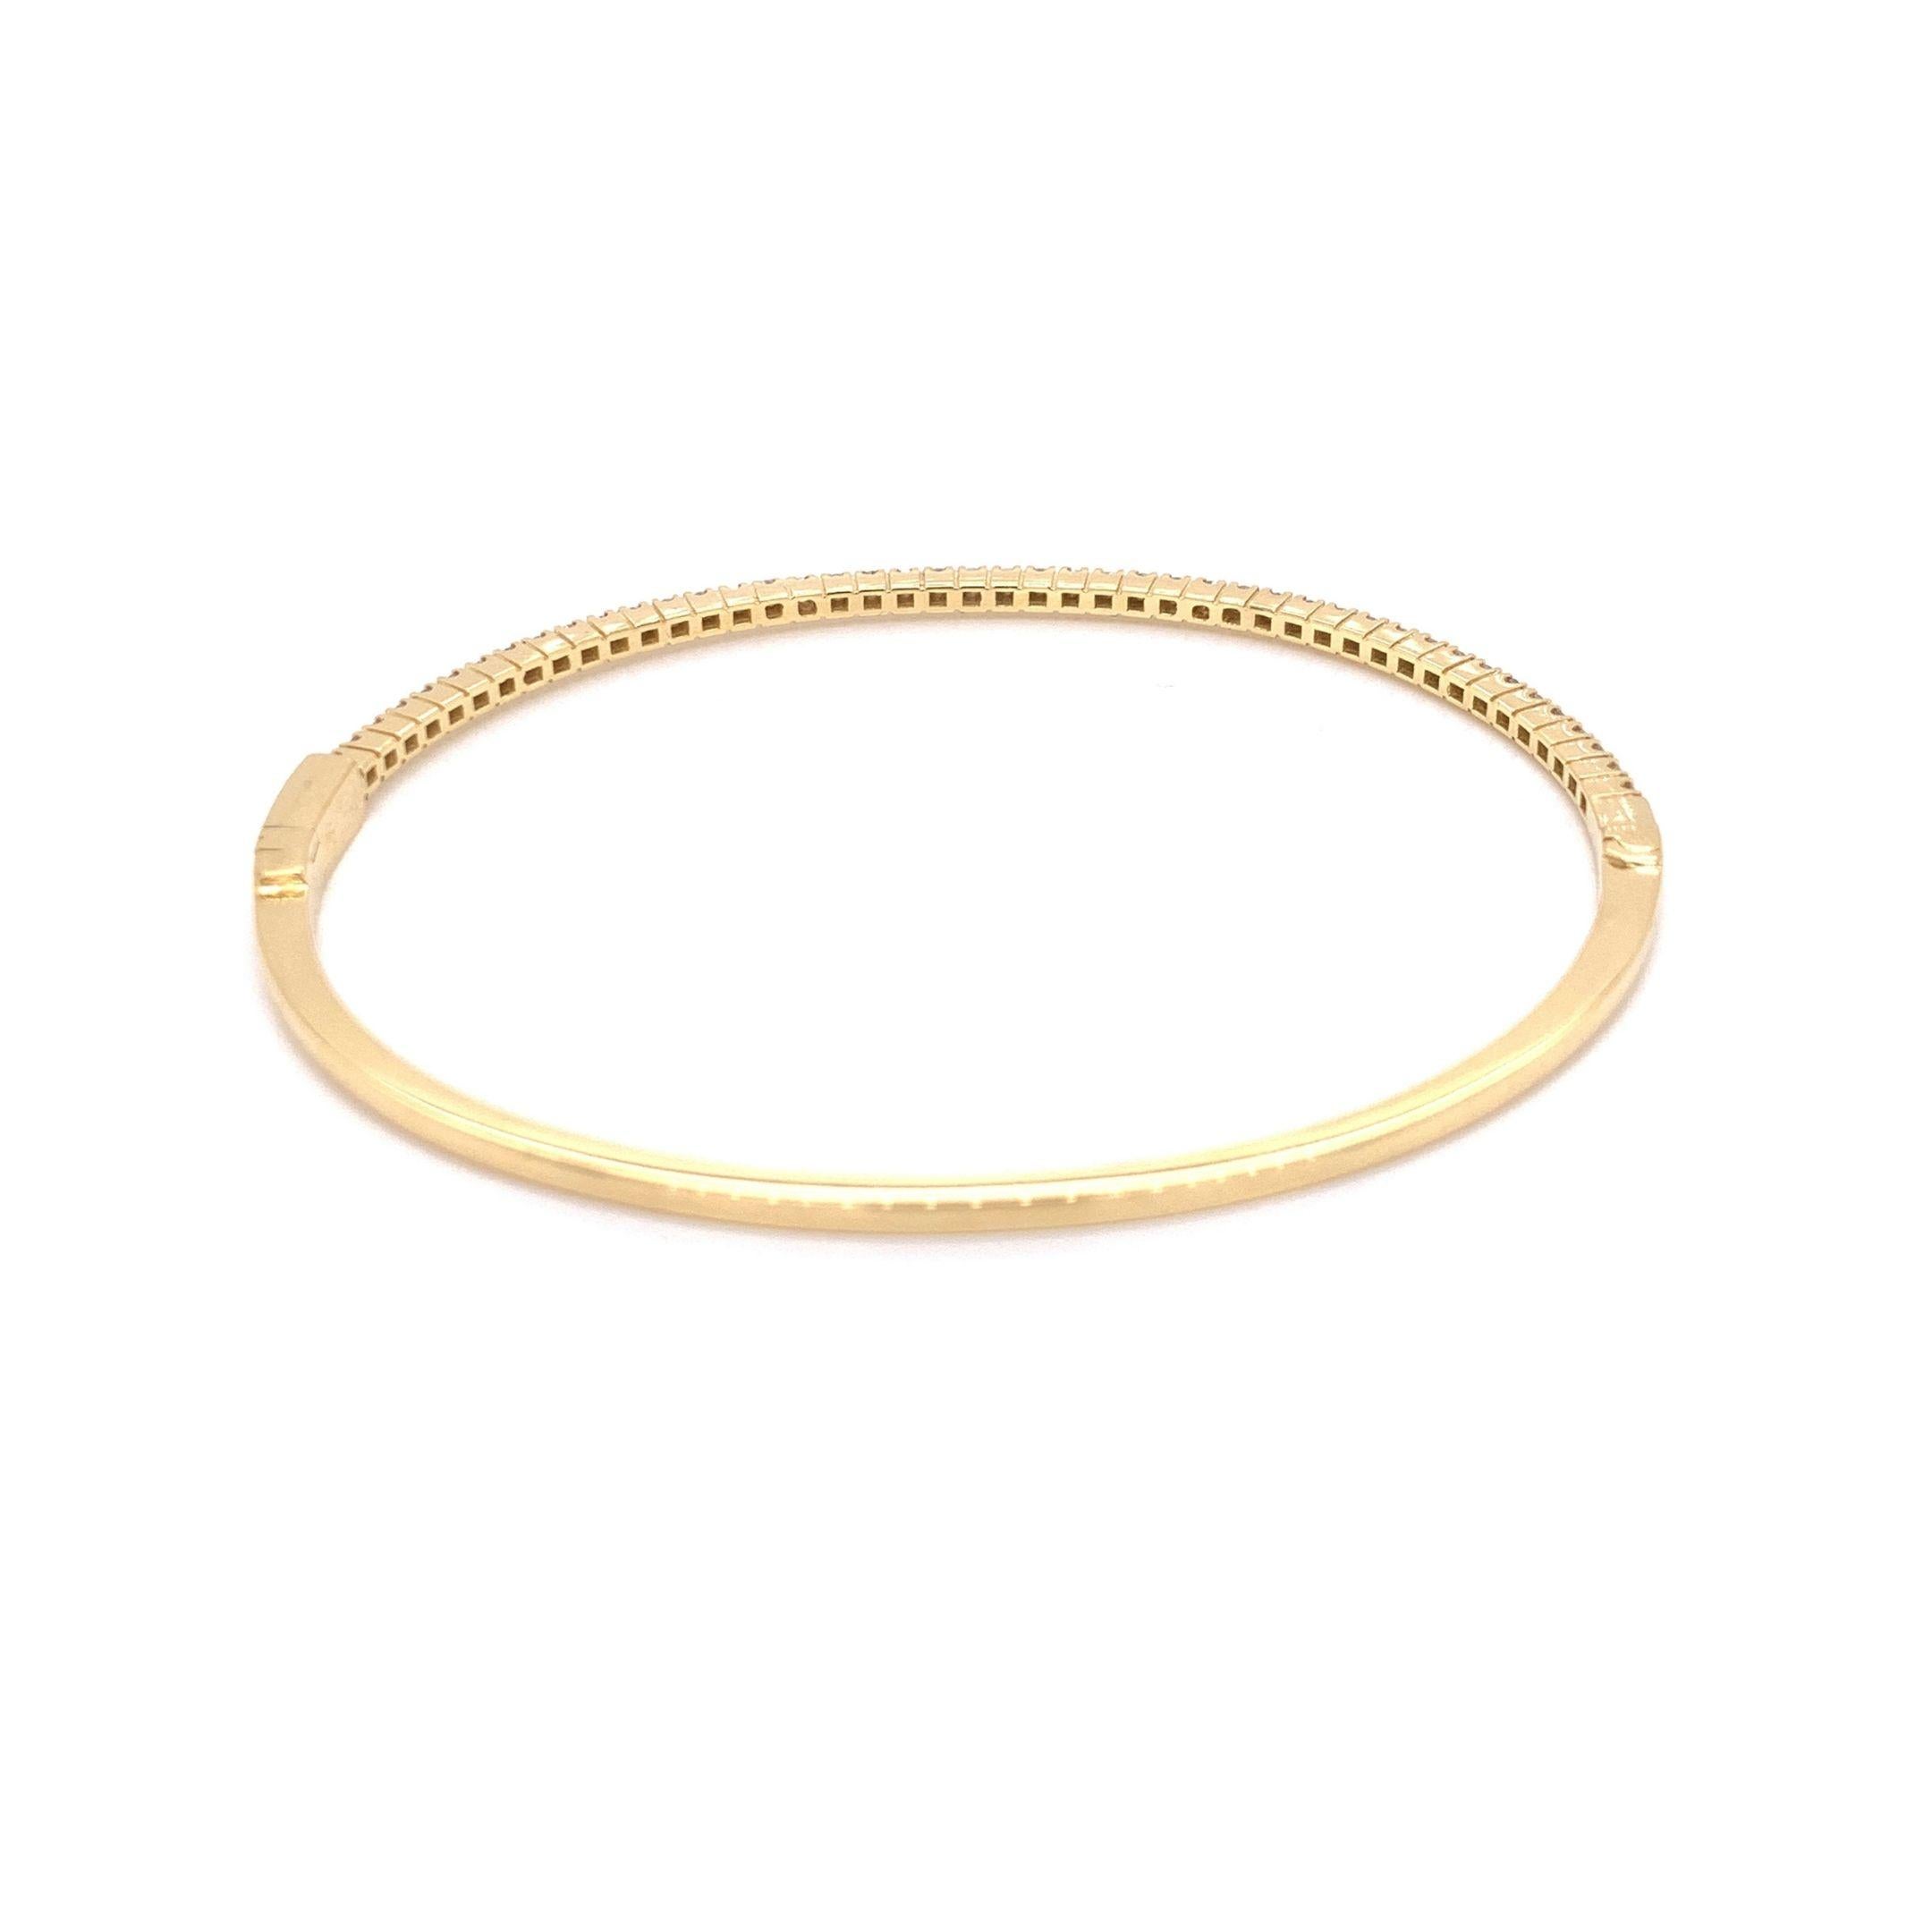 Bangle Diamond Half Tennis bracelet made with real/natural brilliant cut diamonds. Diamond Weight: 0.63 carats, Diamond Quantity: 45 (round diamonds), Color: G-H, Clarity: VS. Mounted on 18 karat yellow gold.